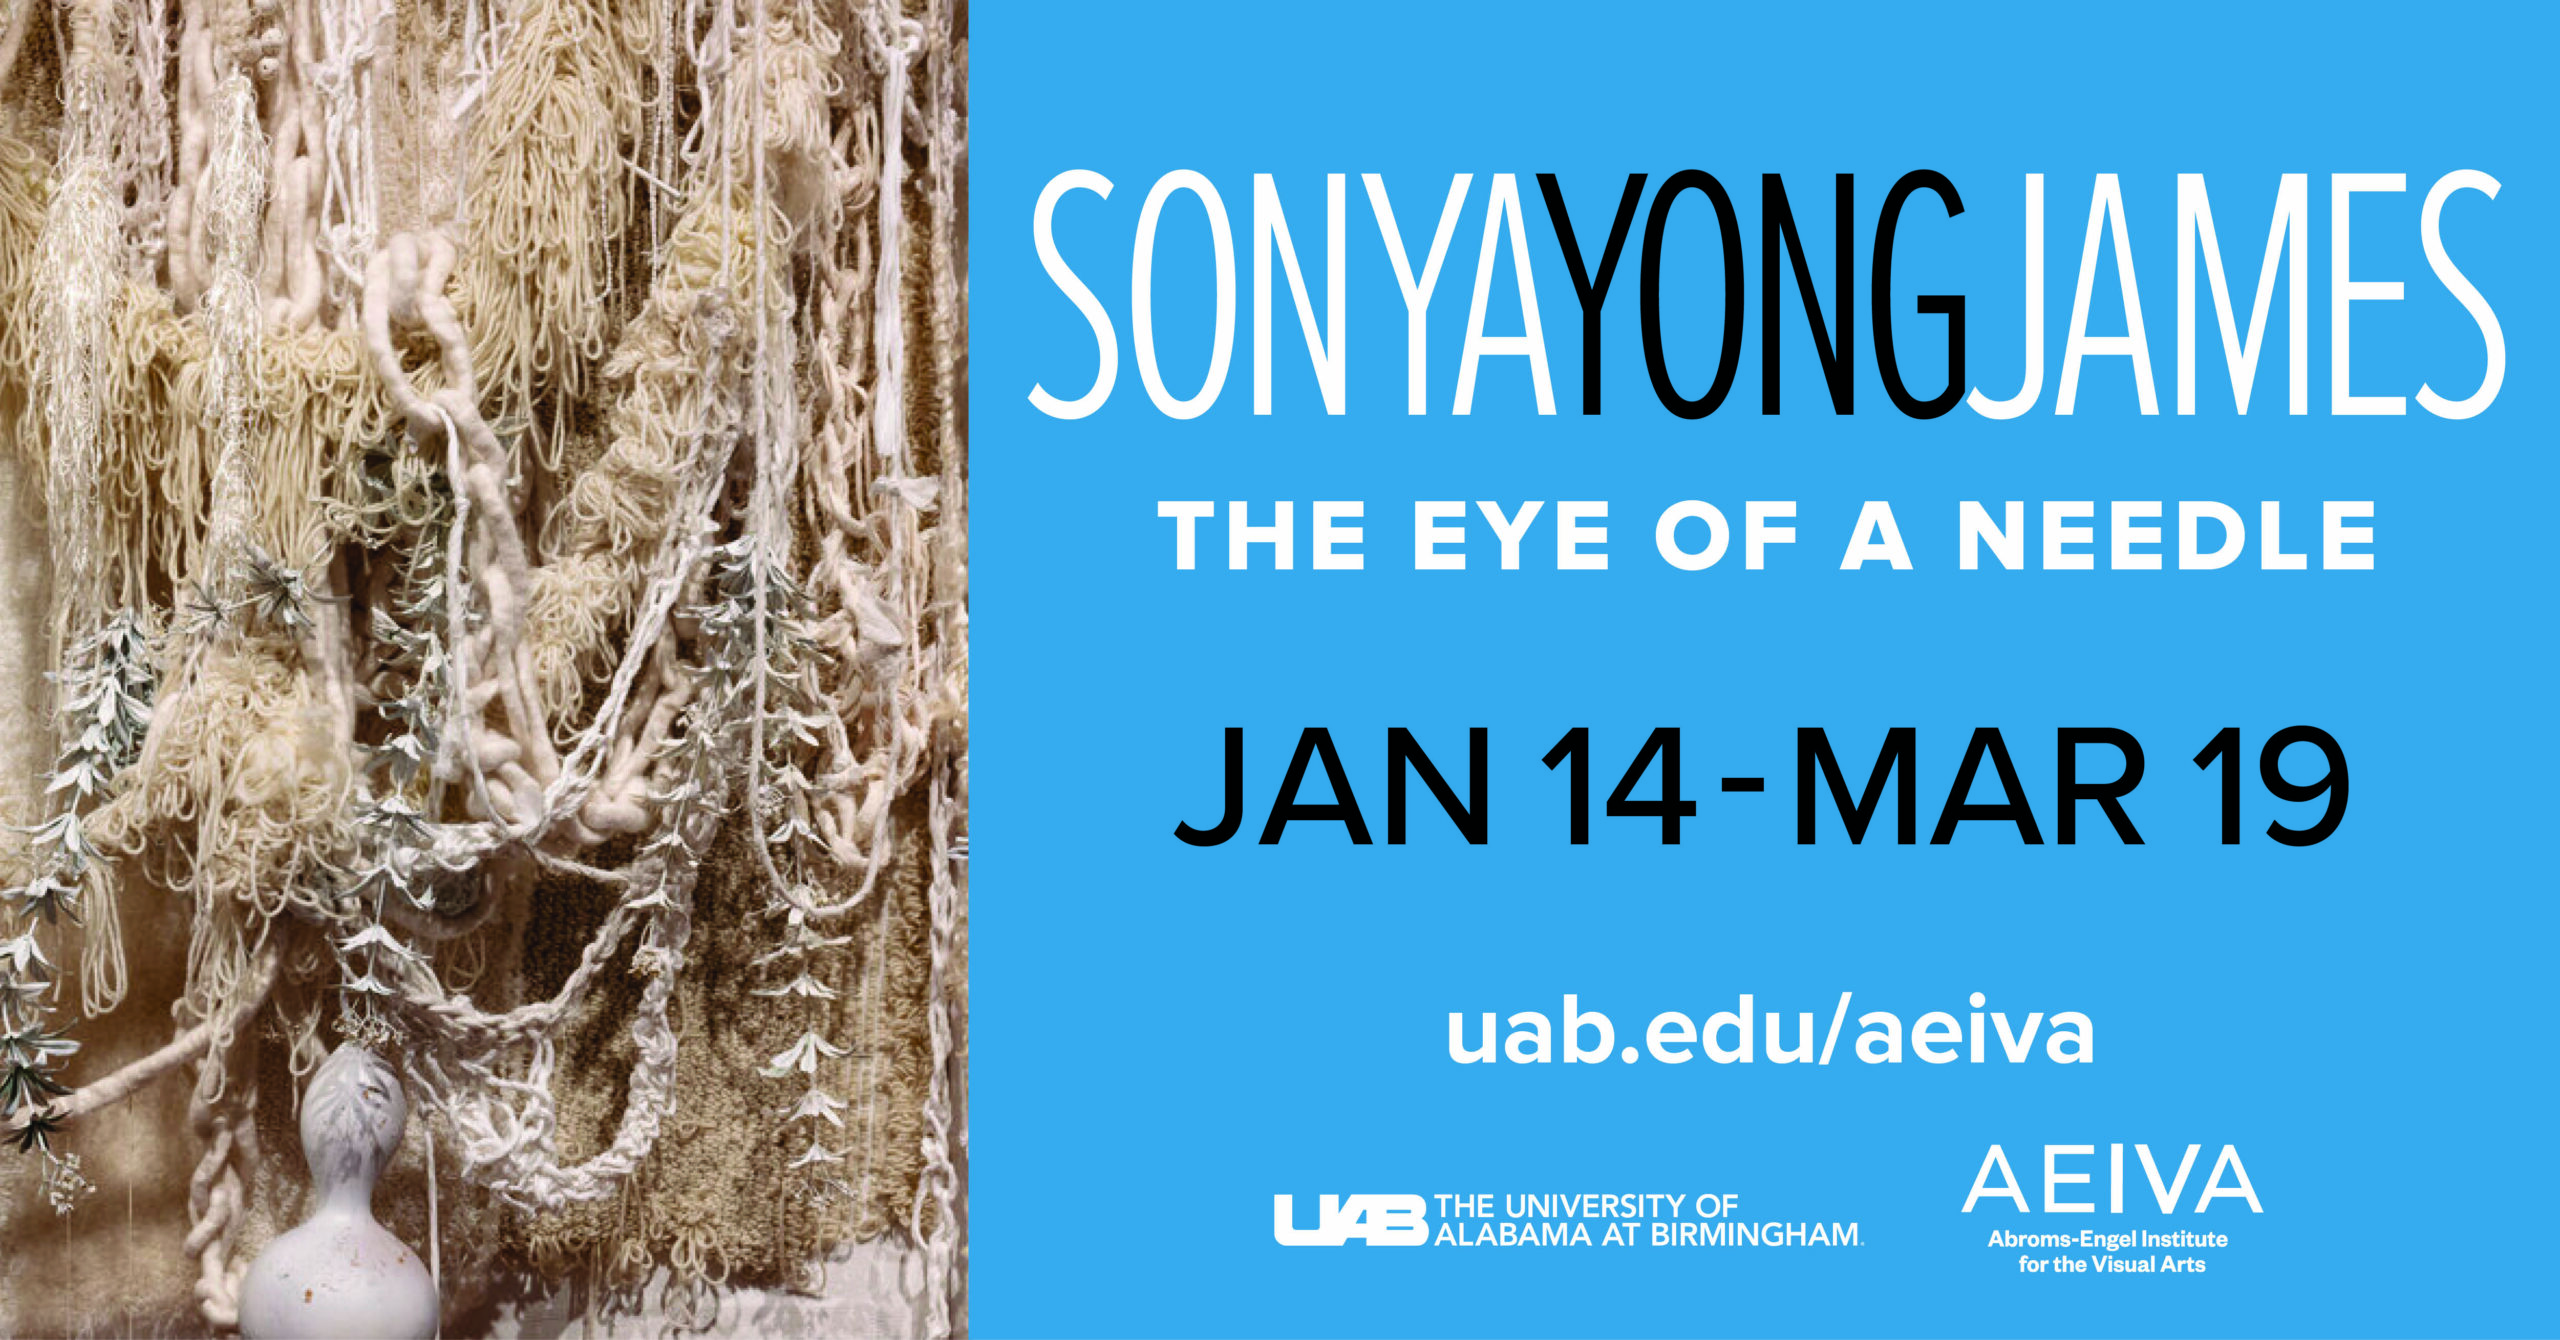 SonyaYongJames Facebook2 scaled AEIVA Presents Sonya Yong James: The Eye of a Needle